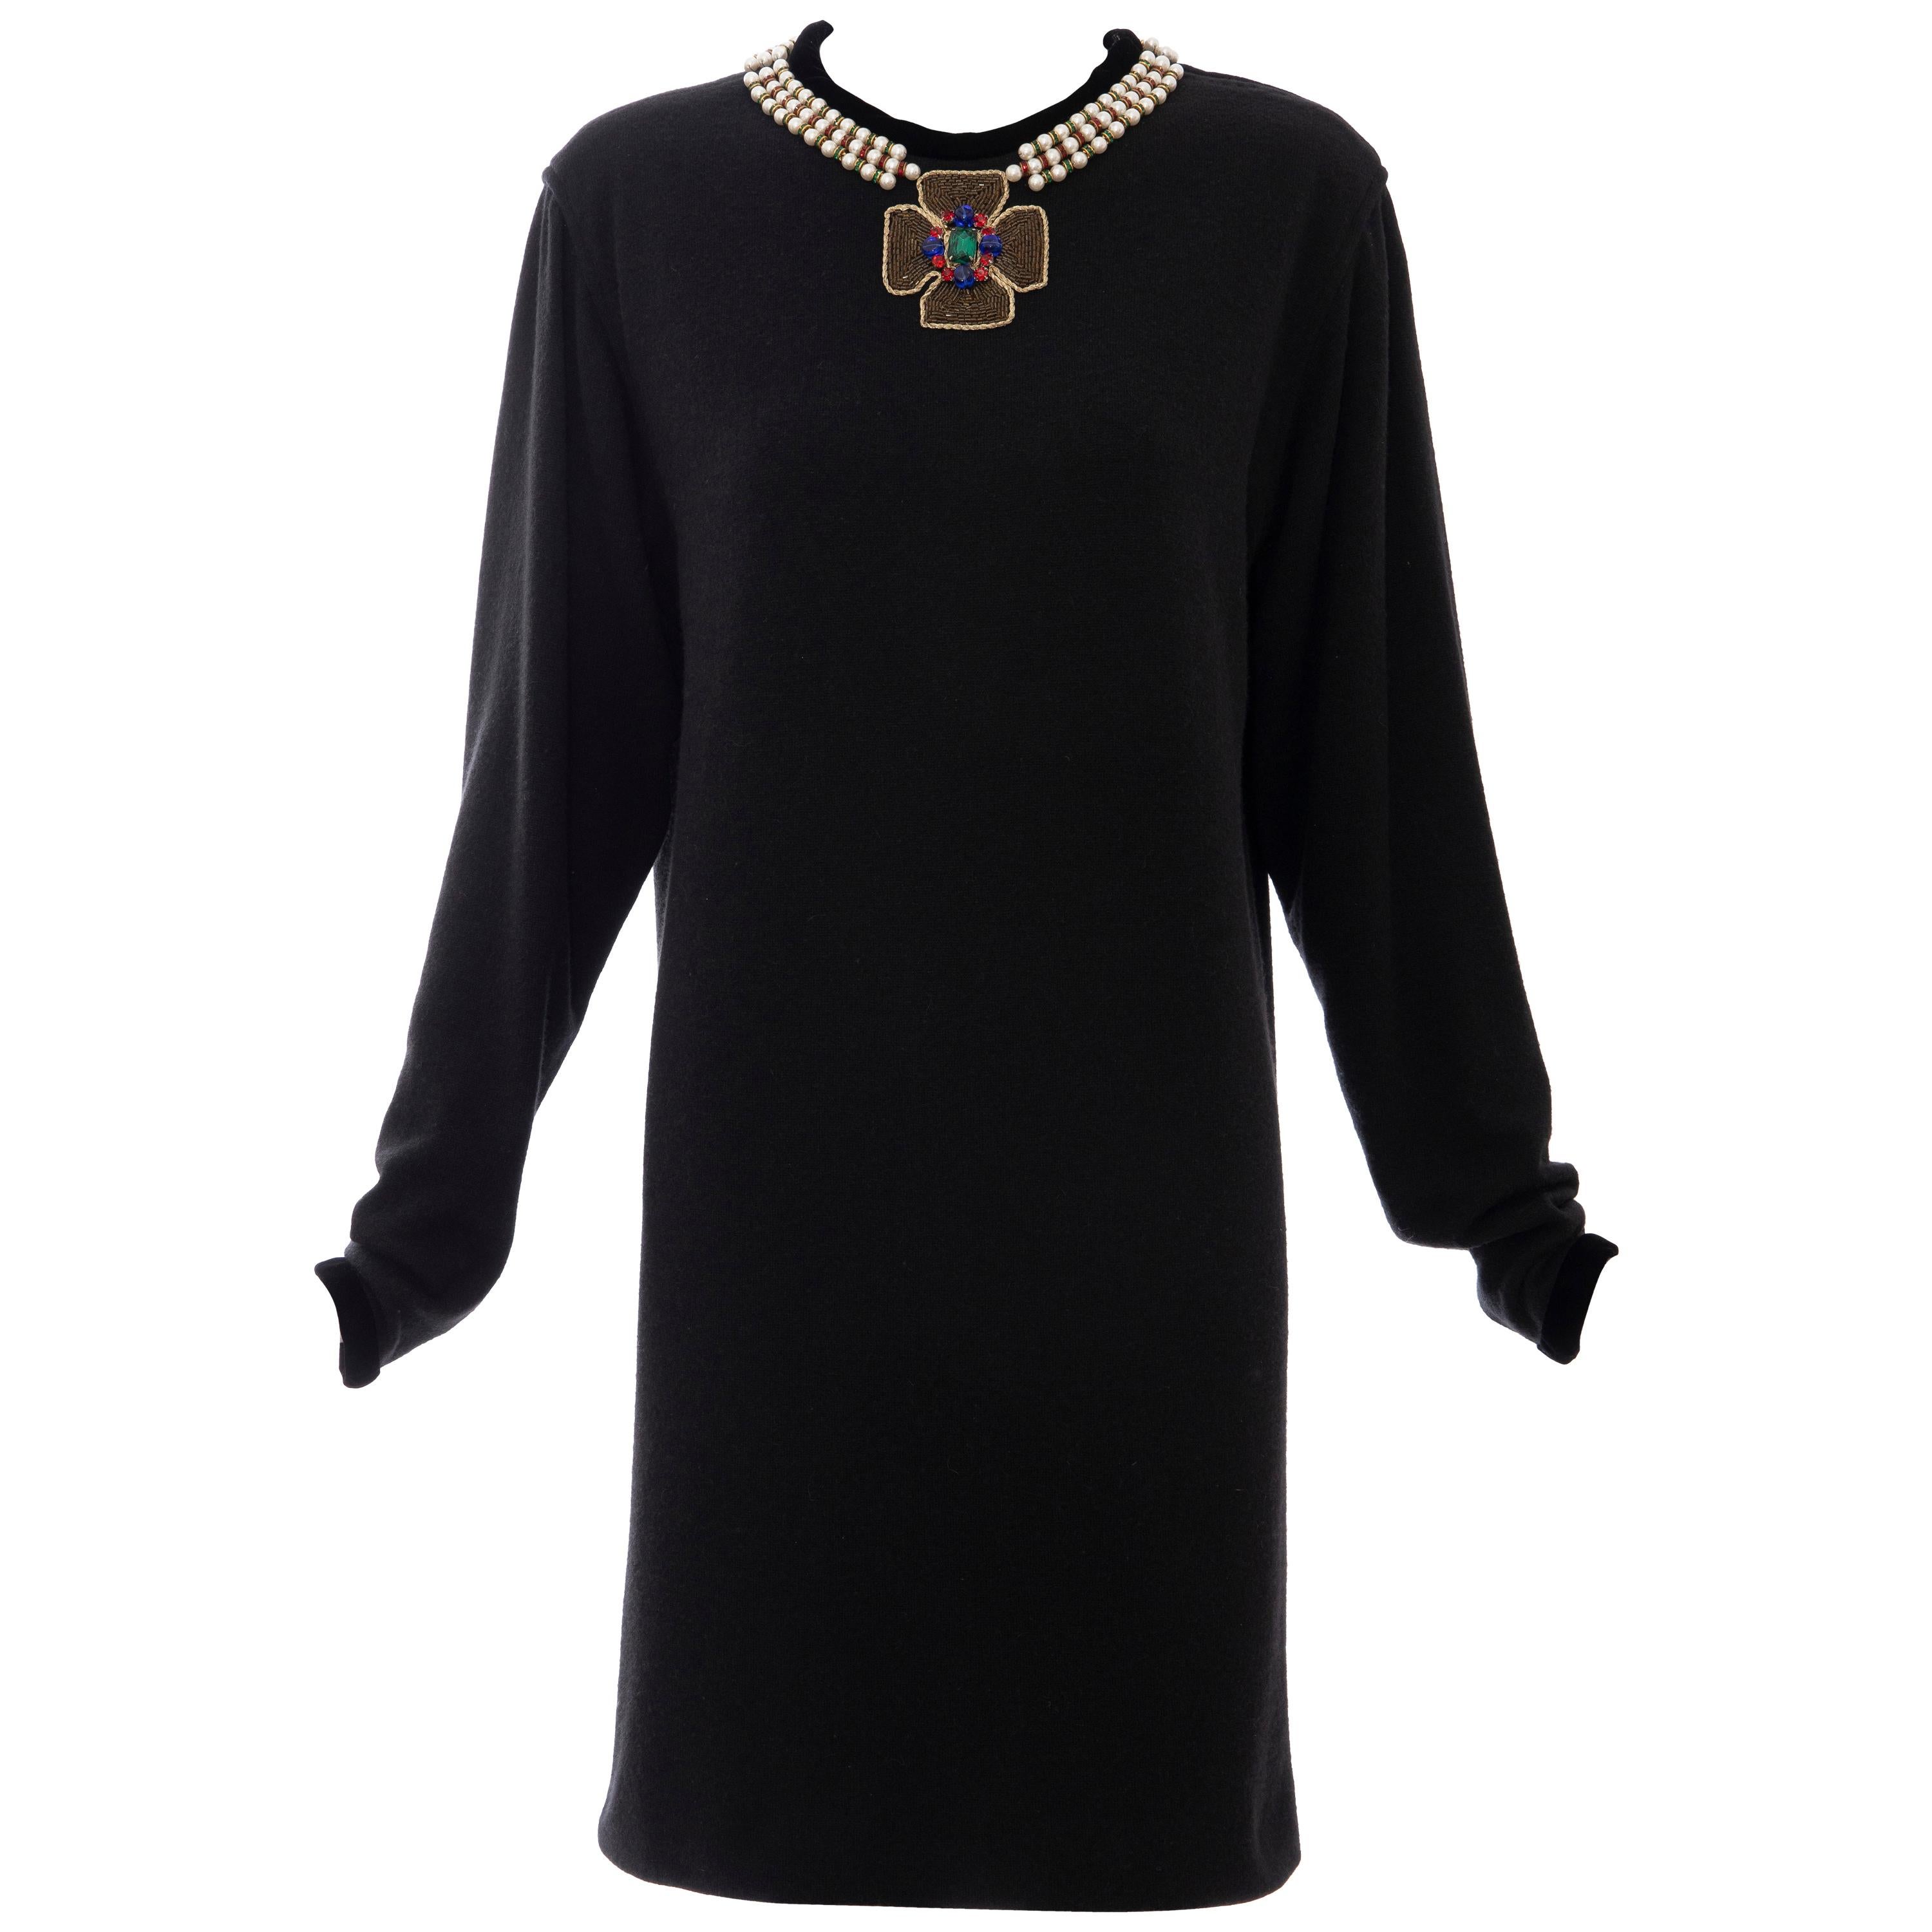 Oscar de la Renta Runway Black Embroidered Neckline Sweater Dress, Fall 1984 For Sale